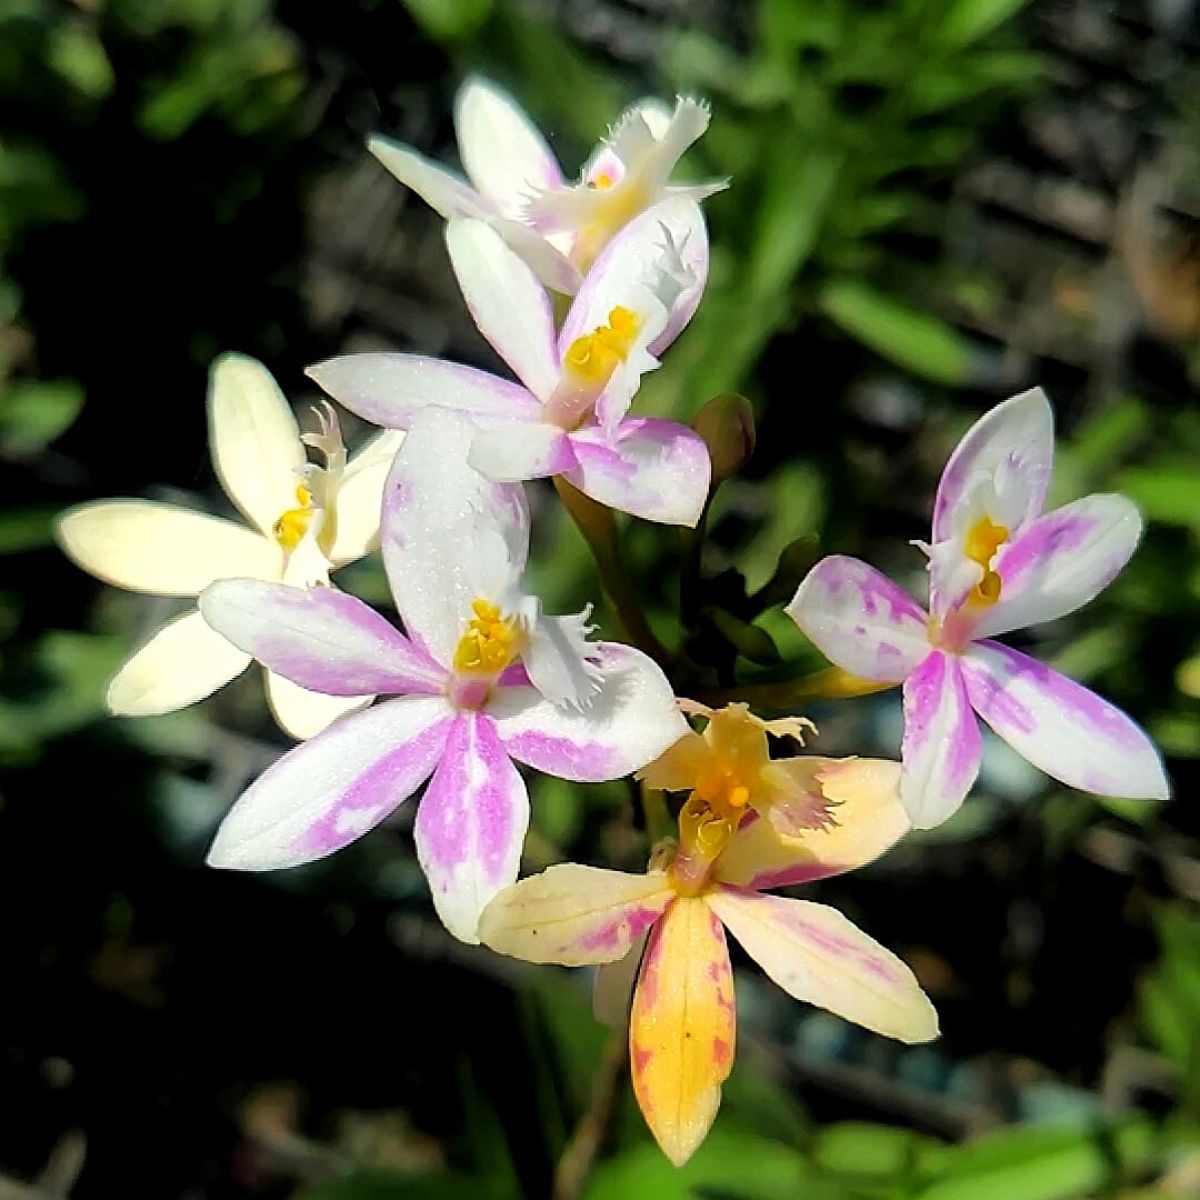 Epidendrum Wedding Valley Yukimai Orchid - Delicate white petals symbolizing purity and elegance